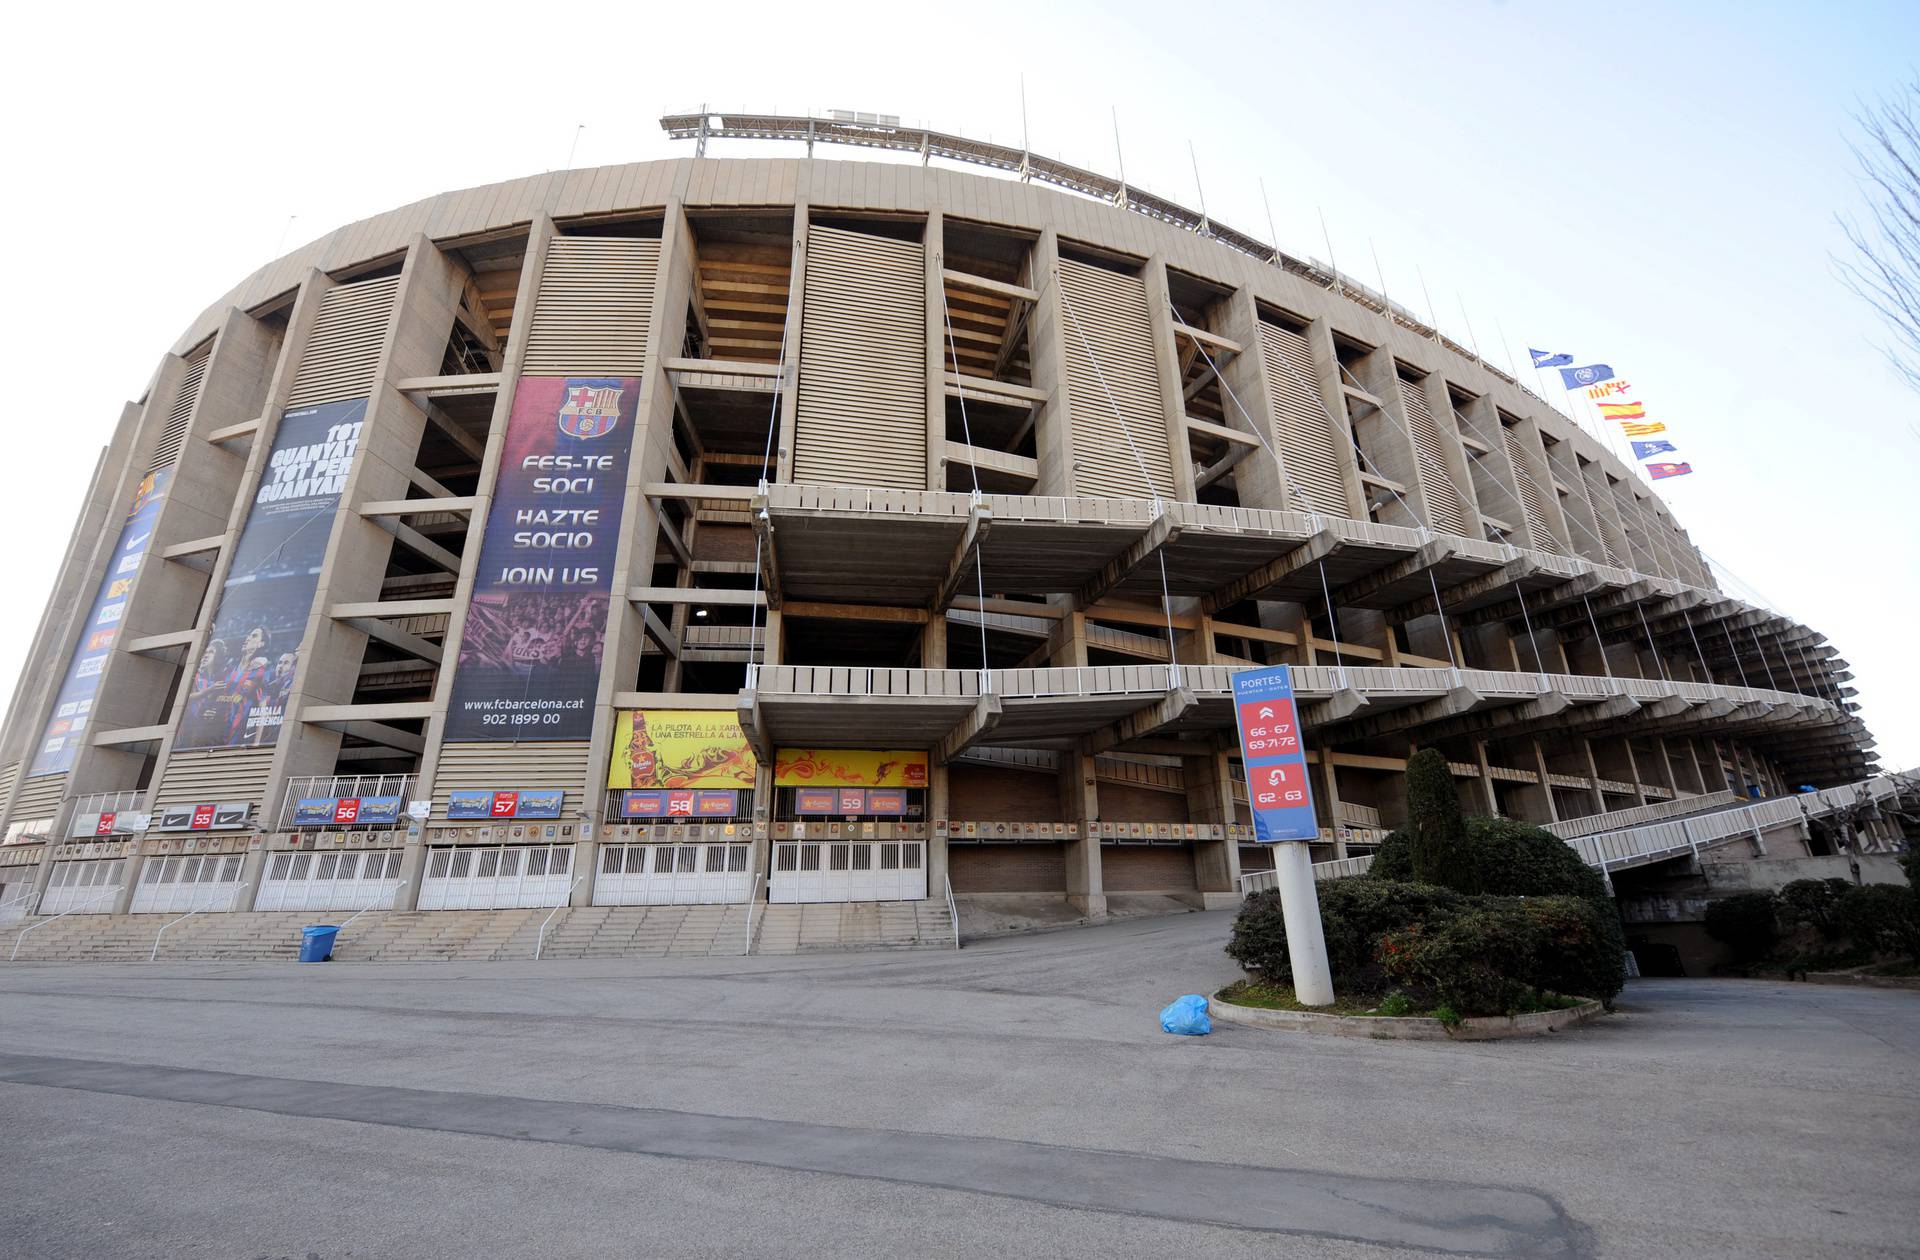 Barcelona: Camp Nou, nogometni stadion u Barceloni